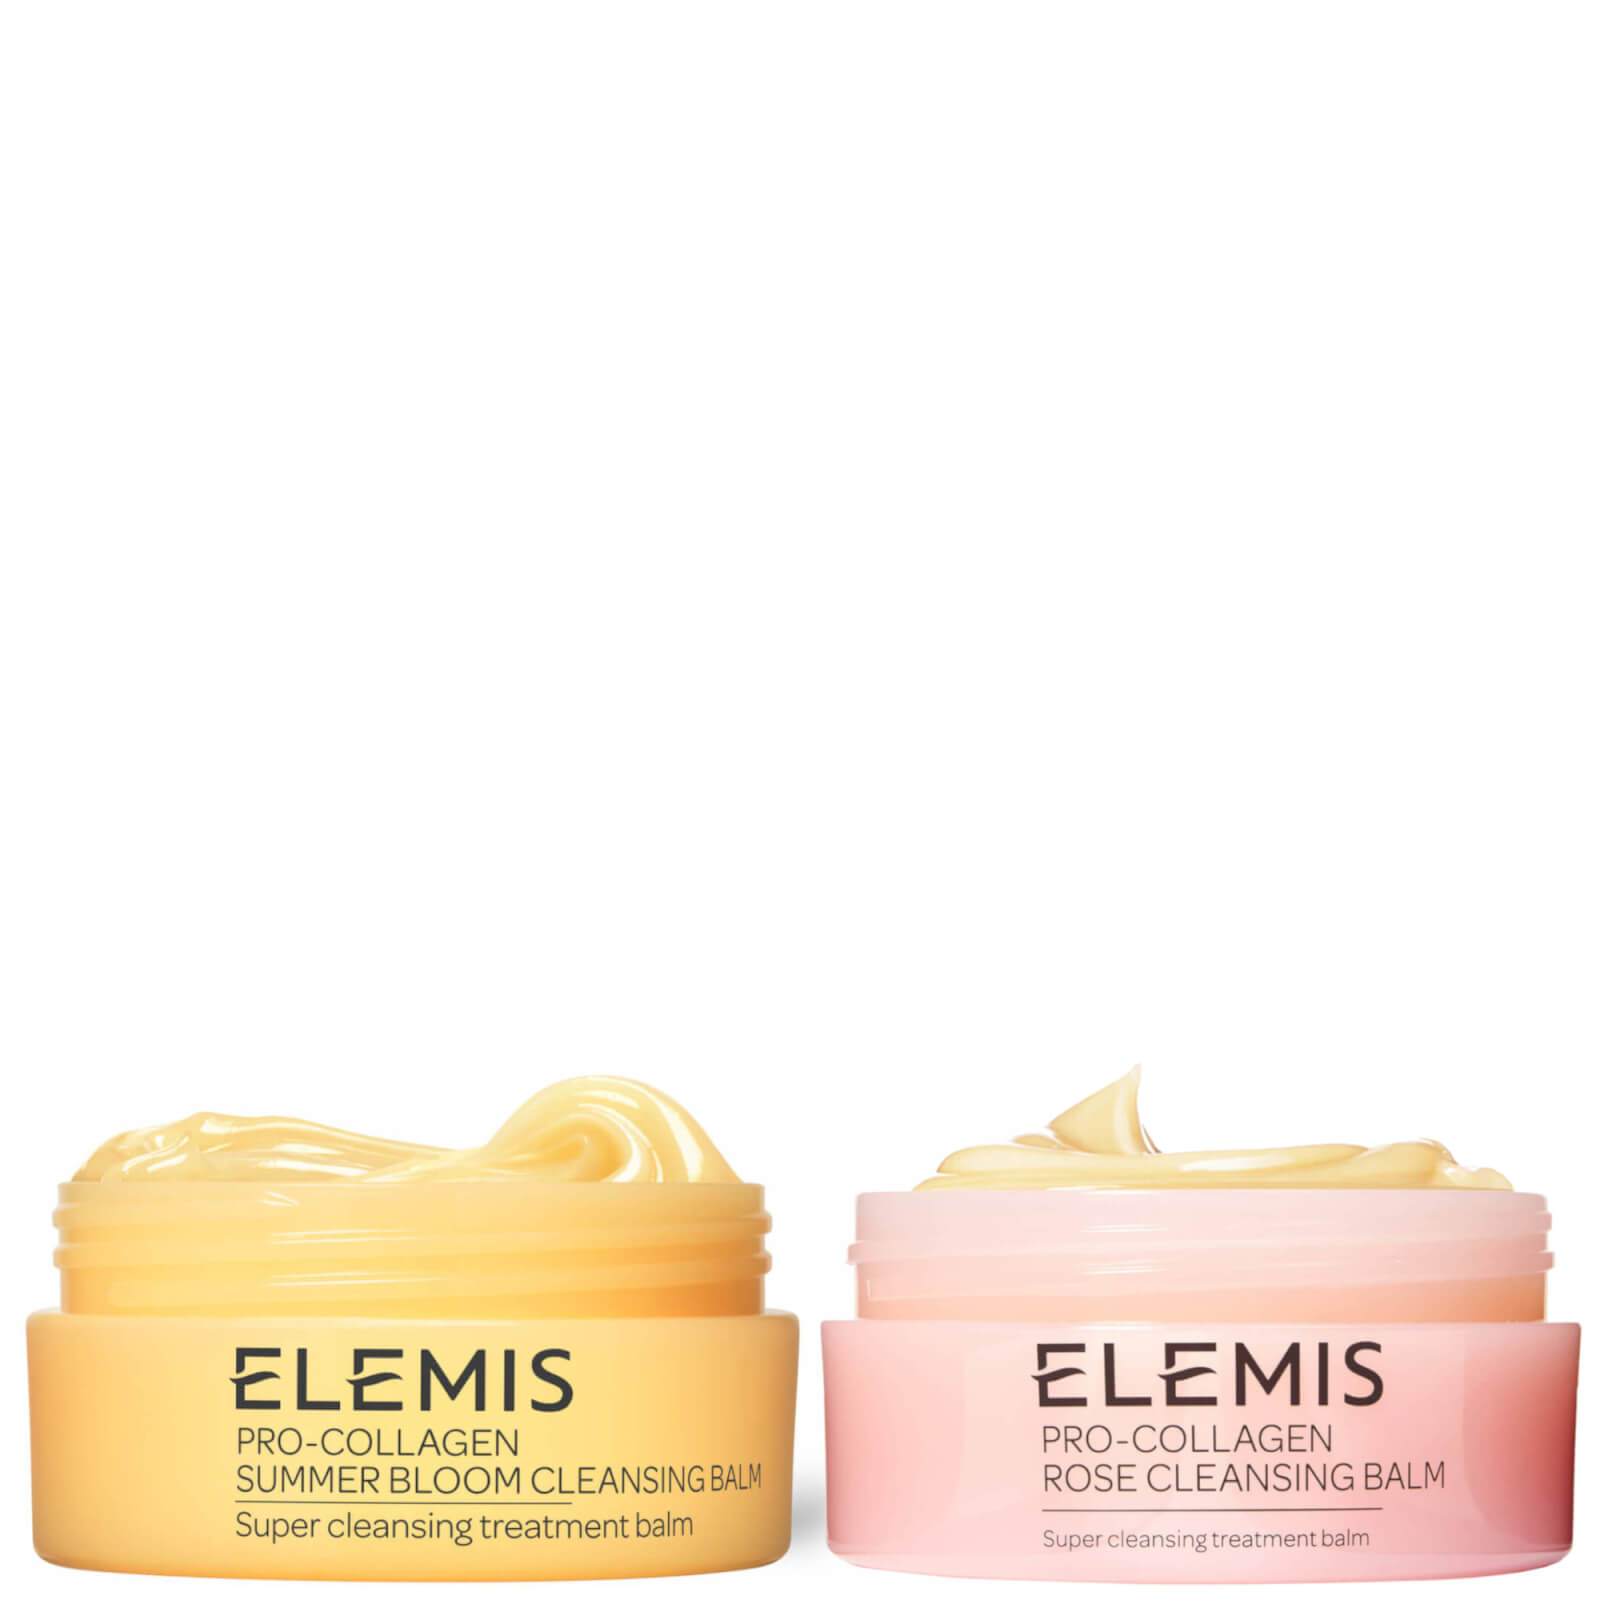 Elemis Pro-collagen Cleansing Balm Duo In Neutral